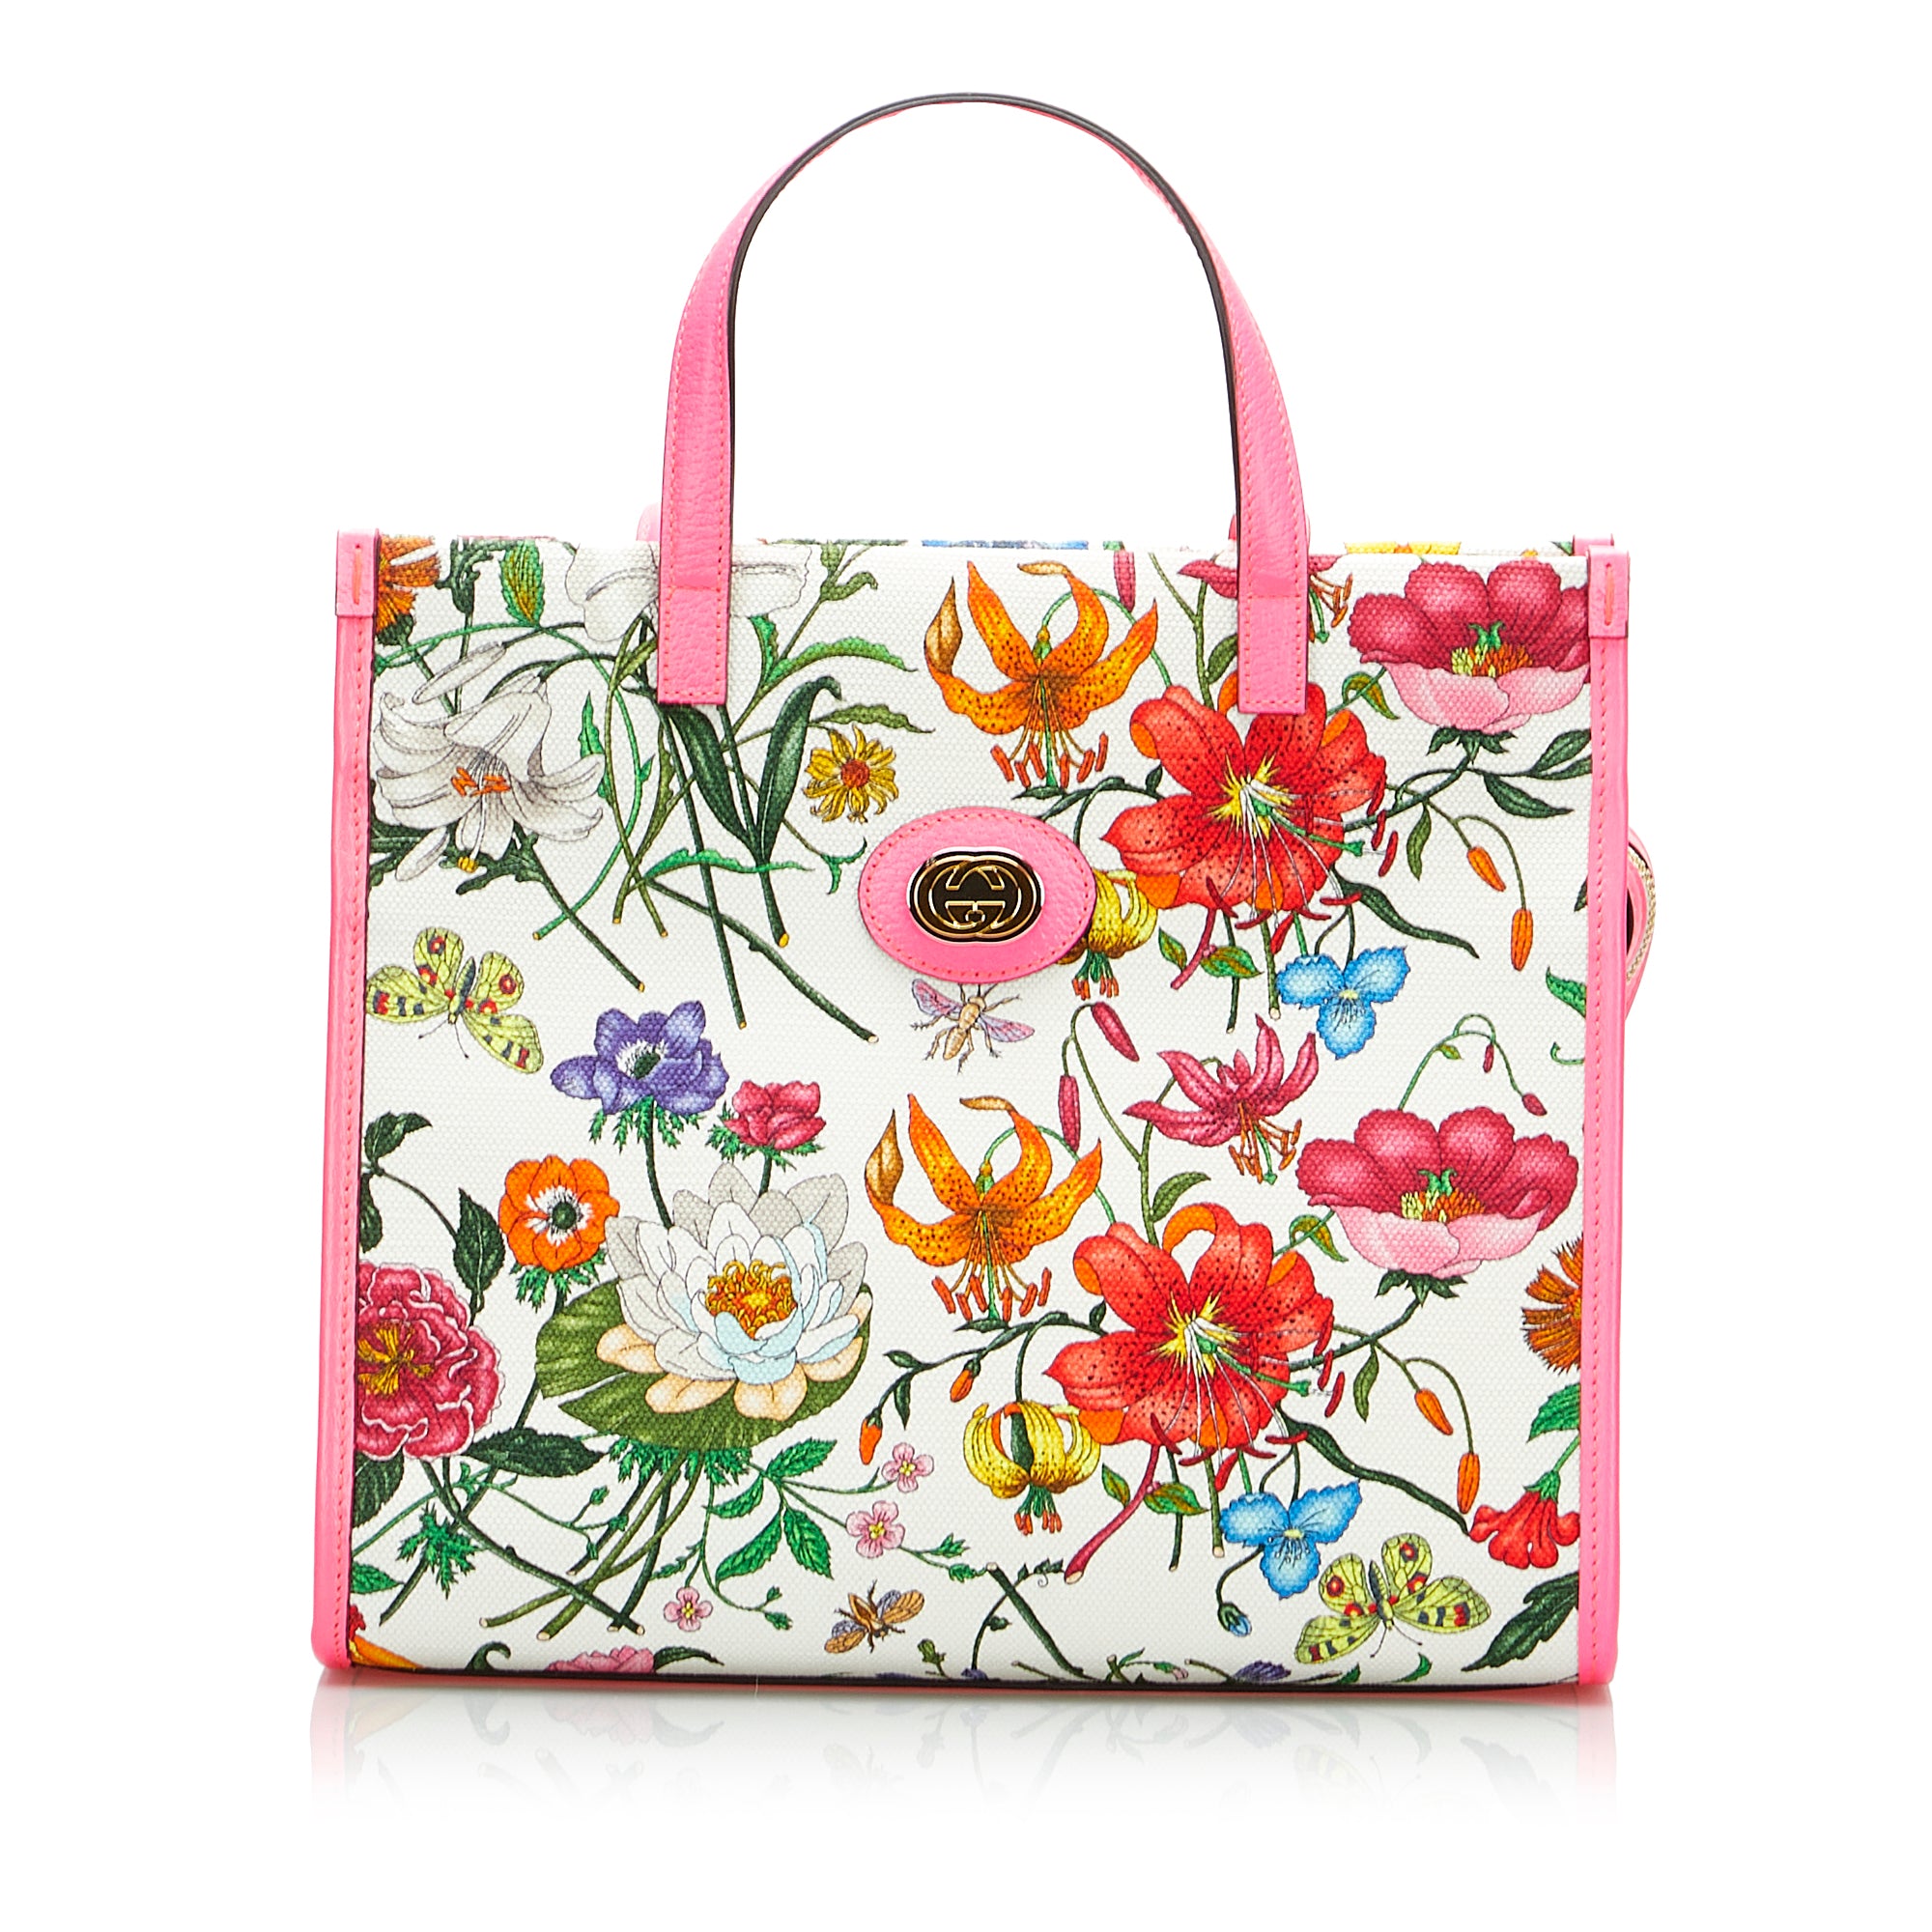 MCM Floral Bucket Bag Review 